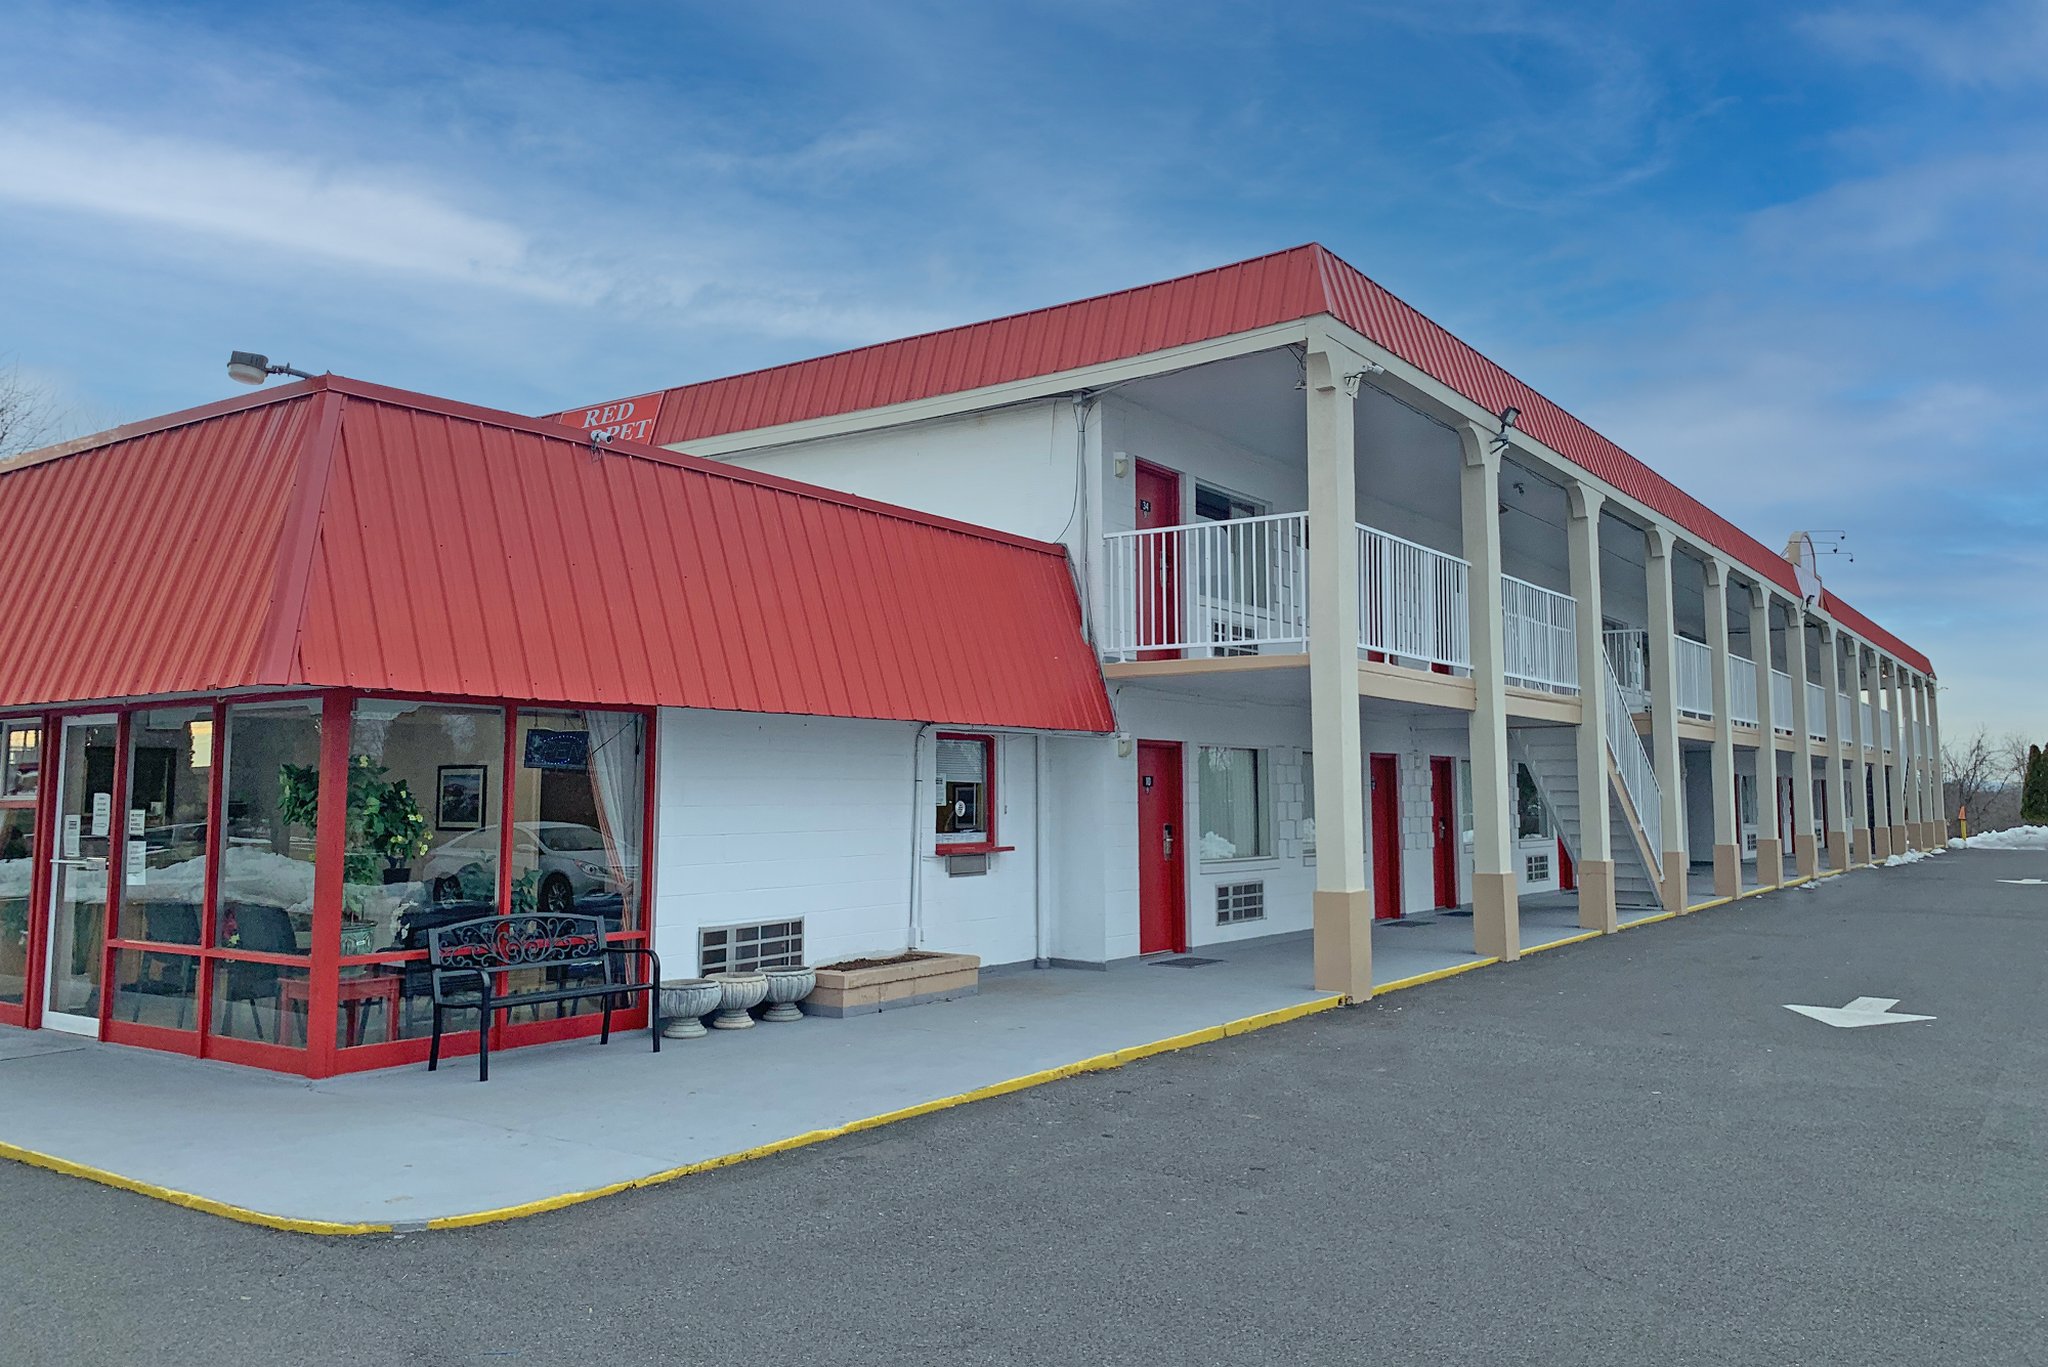 Red Carpet Inn & Suites Culpeper, VA image